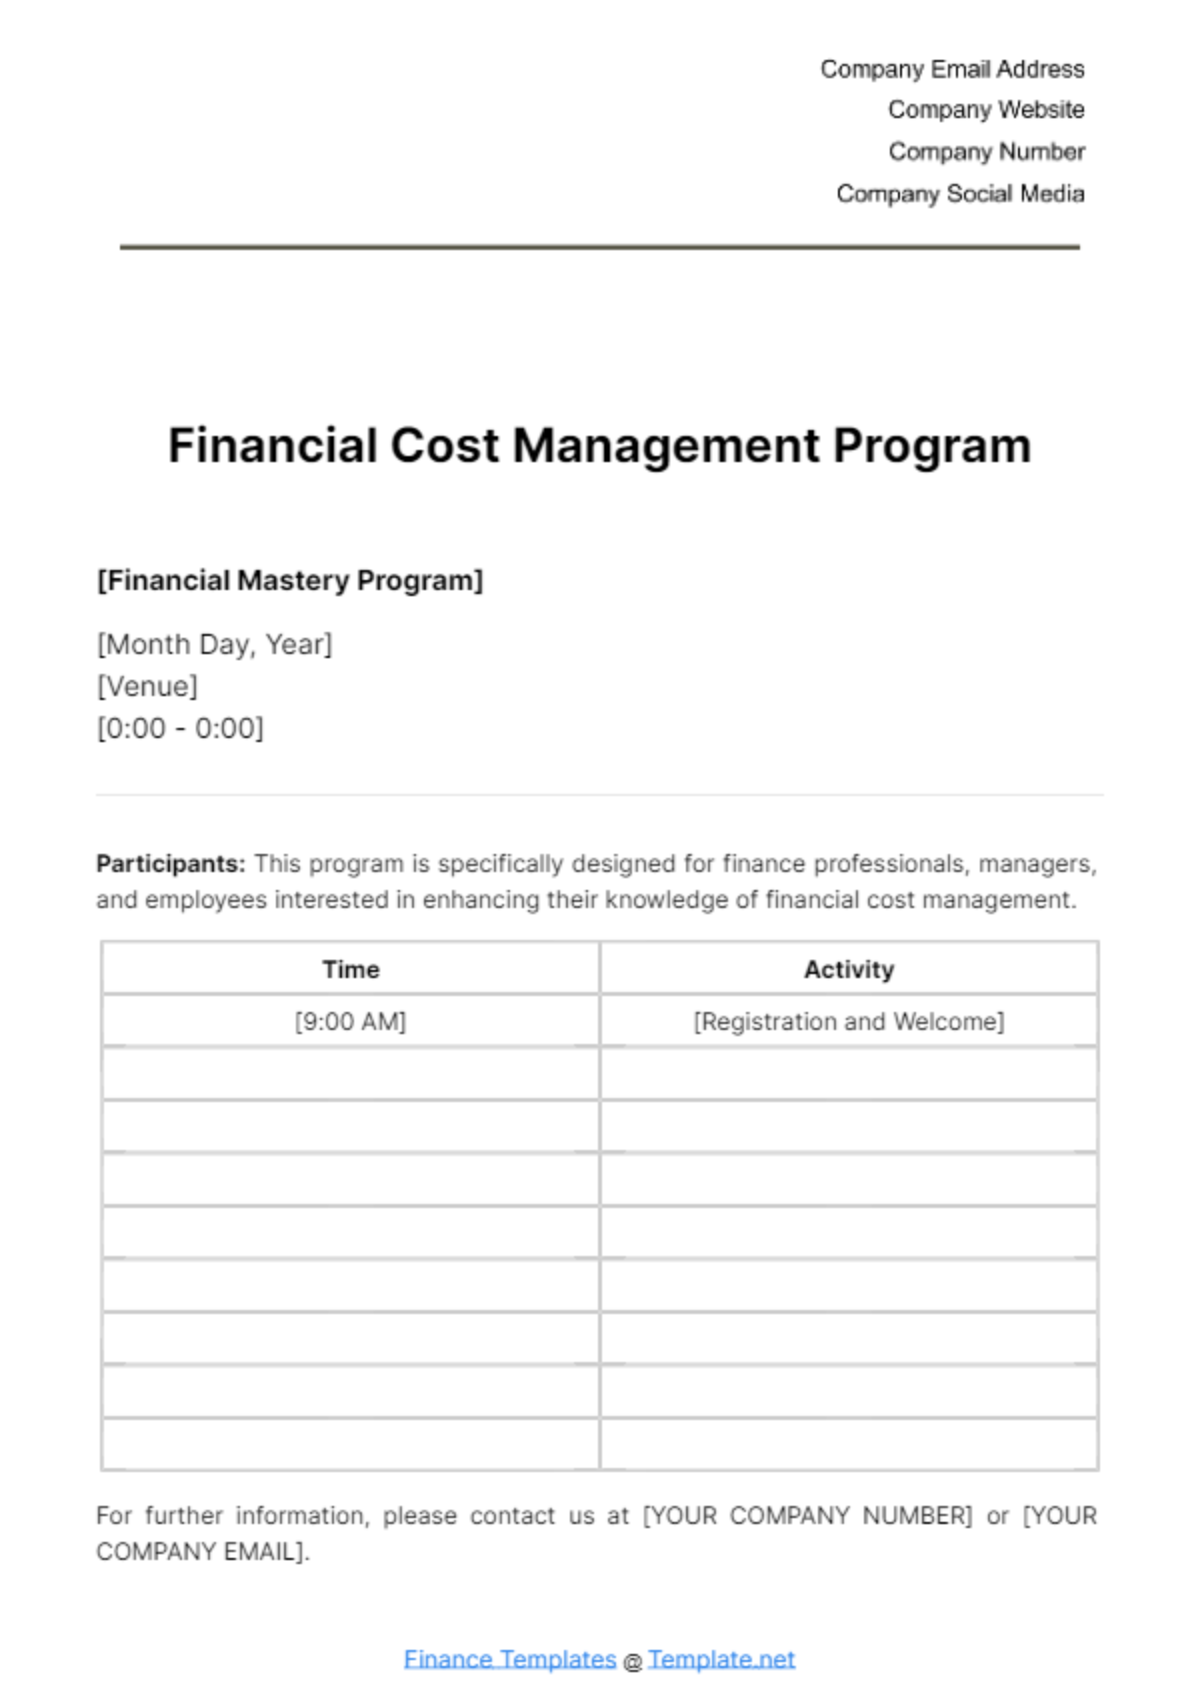 Financial Cost Management Program Template